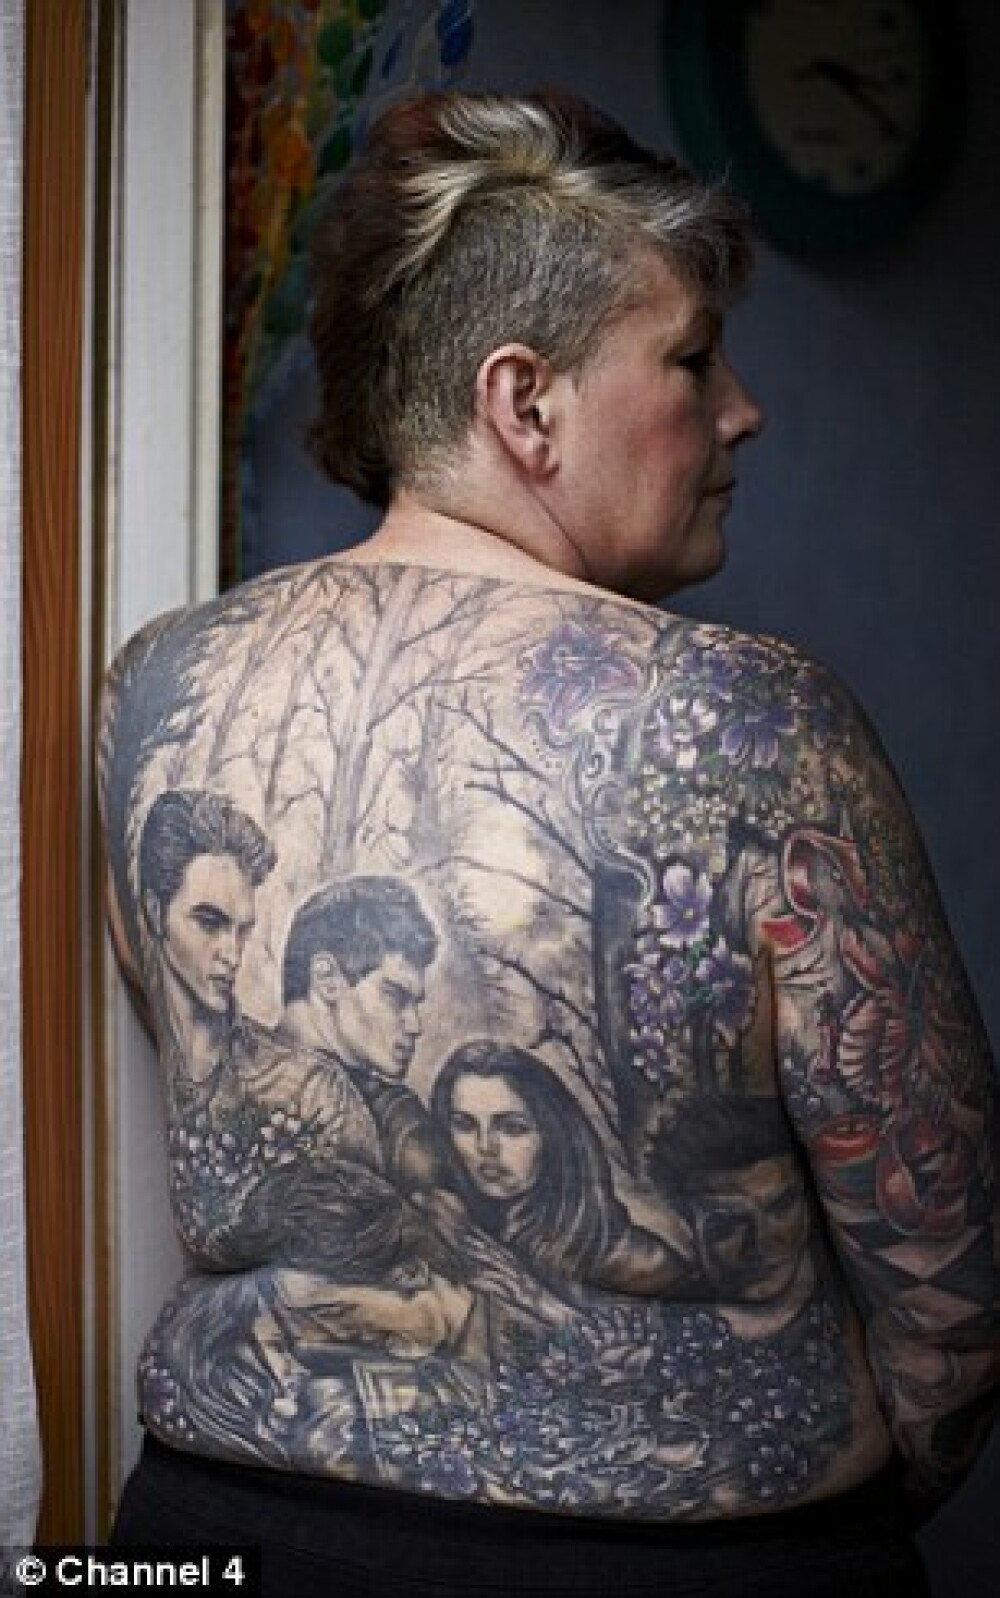 Cum arata femeia care a platit o avere sa-si tatueze tot corpul cu imagini din seria Twilight - Imaginea 2